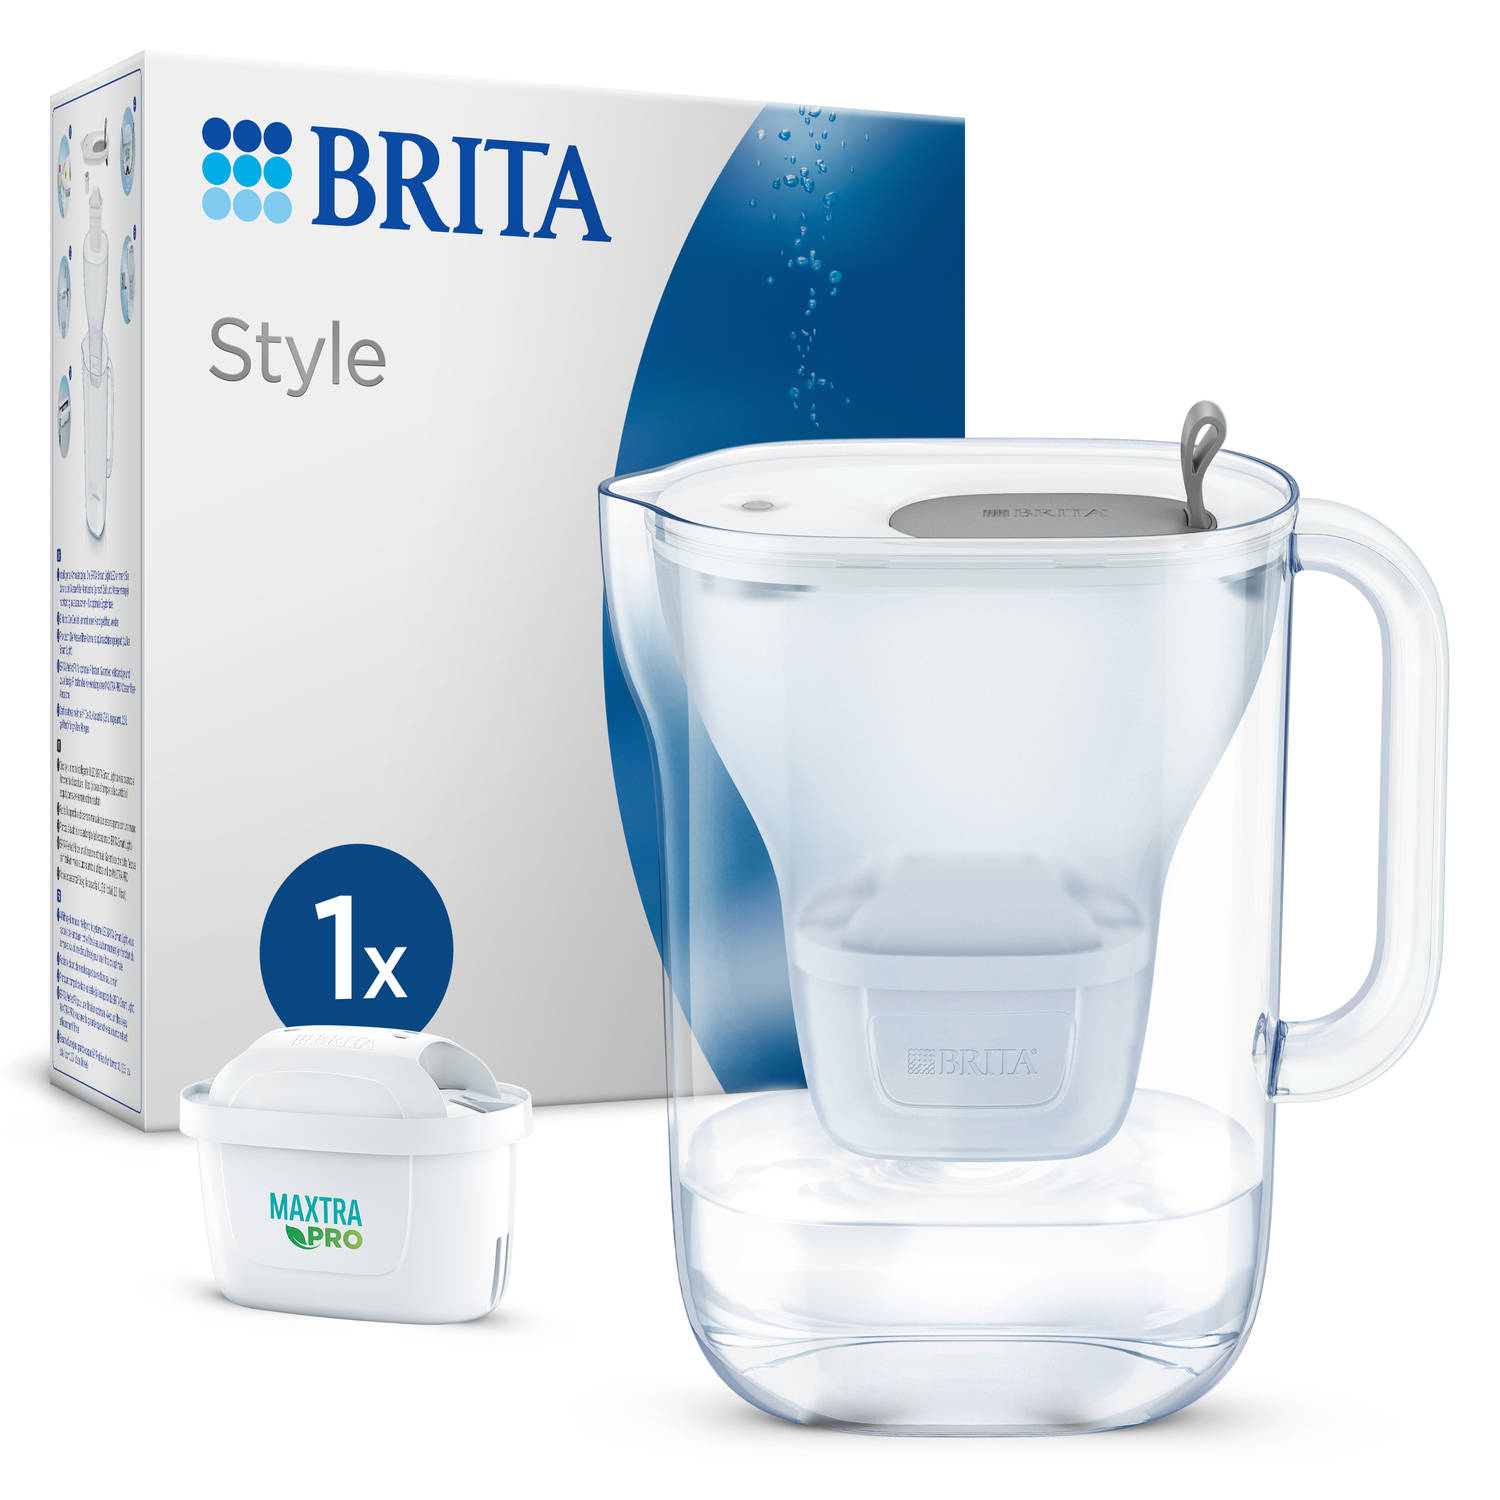 BRITA - Waterfilterkan - Style Cool - Inclusief 1 MAXTRA Pro All-in-1 waterfilterpatroon - Grijs - 2,4L